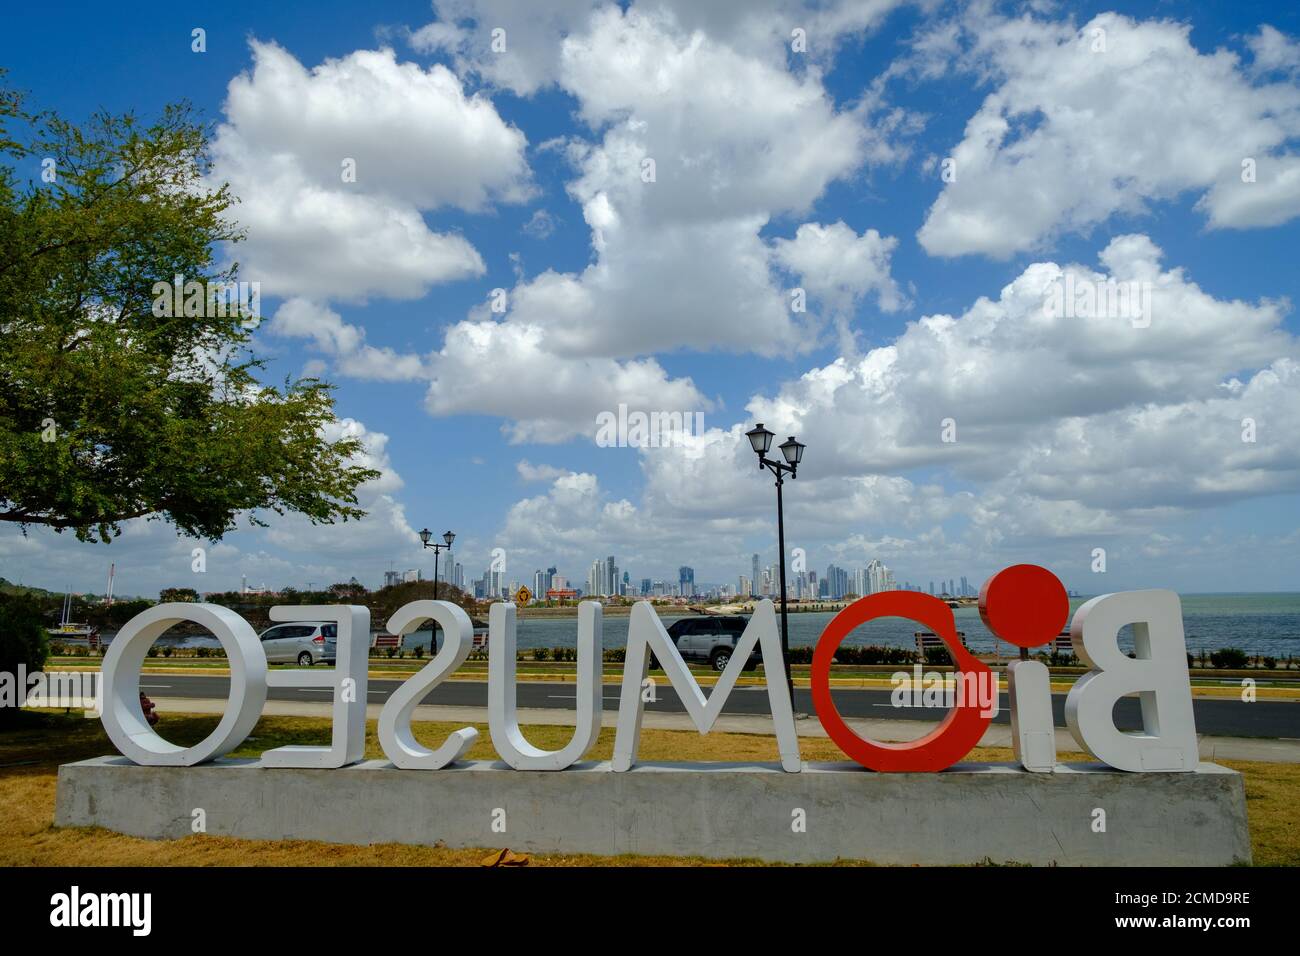 PANAMA-STADT, PANAMA - 29. Feb 2020: Weltberühmtes Biomuseo-Schild mit Blick auf Panama-Stadt am schönen Nachmittag. Stockfoto